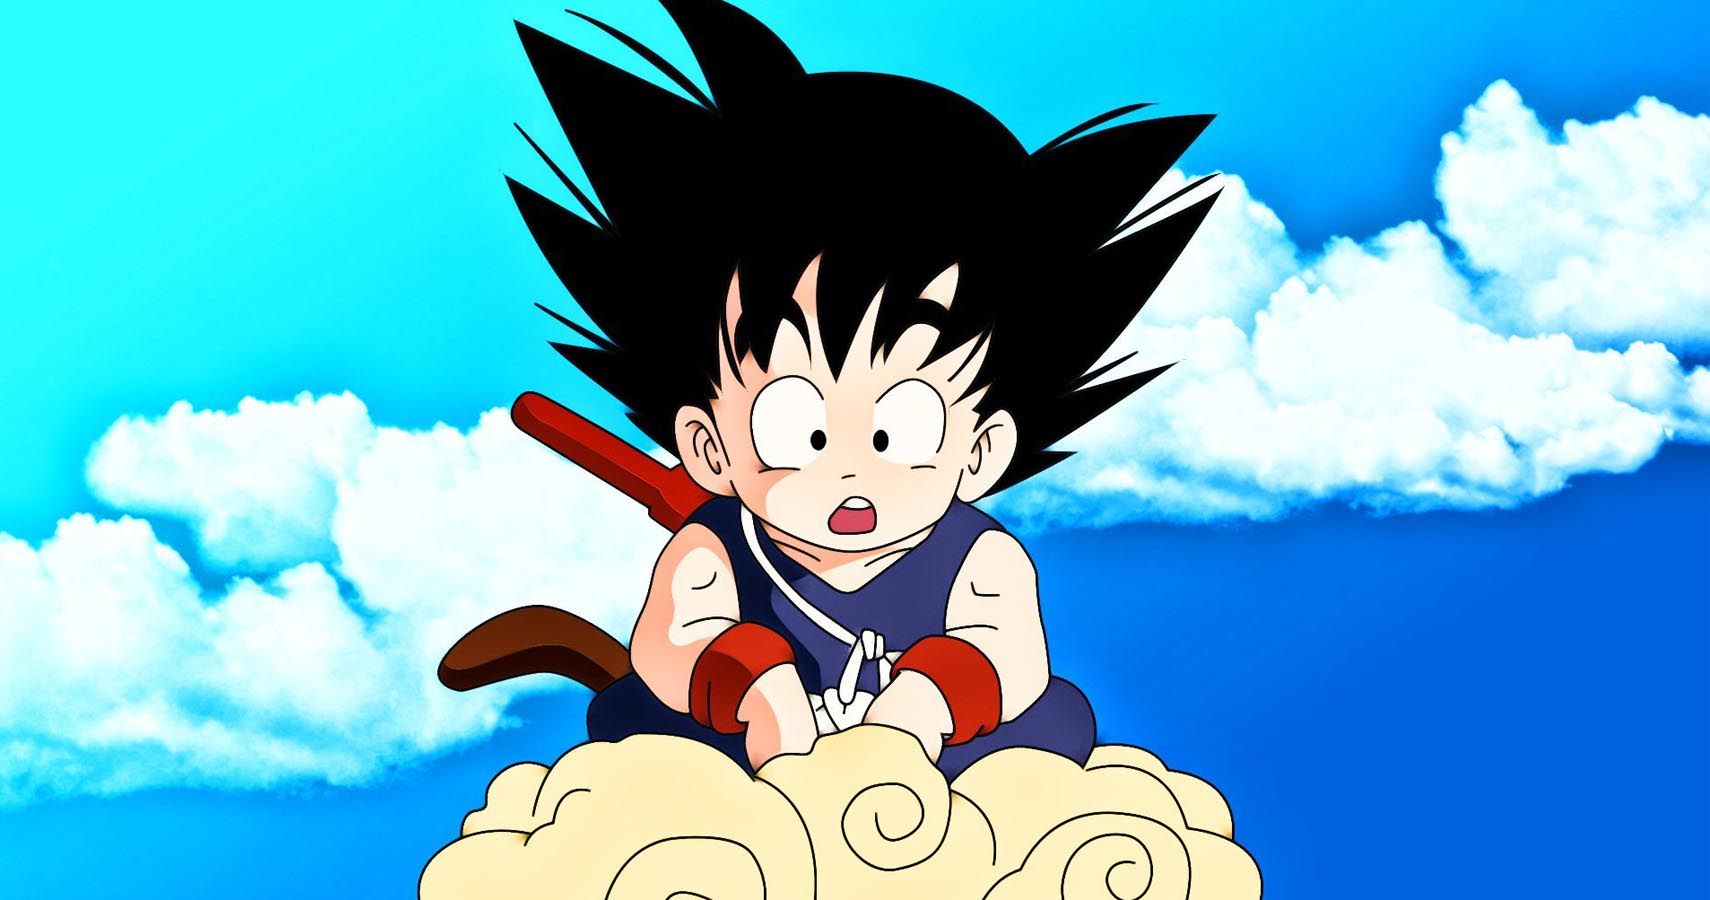 Super Saiyan Goku Shows His Full Power in Unique Fan Tribute